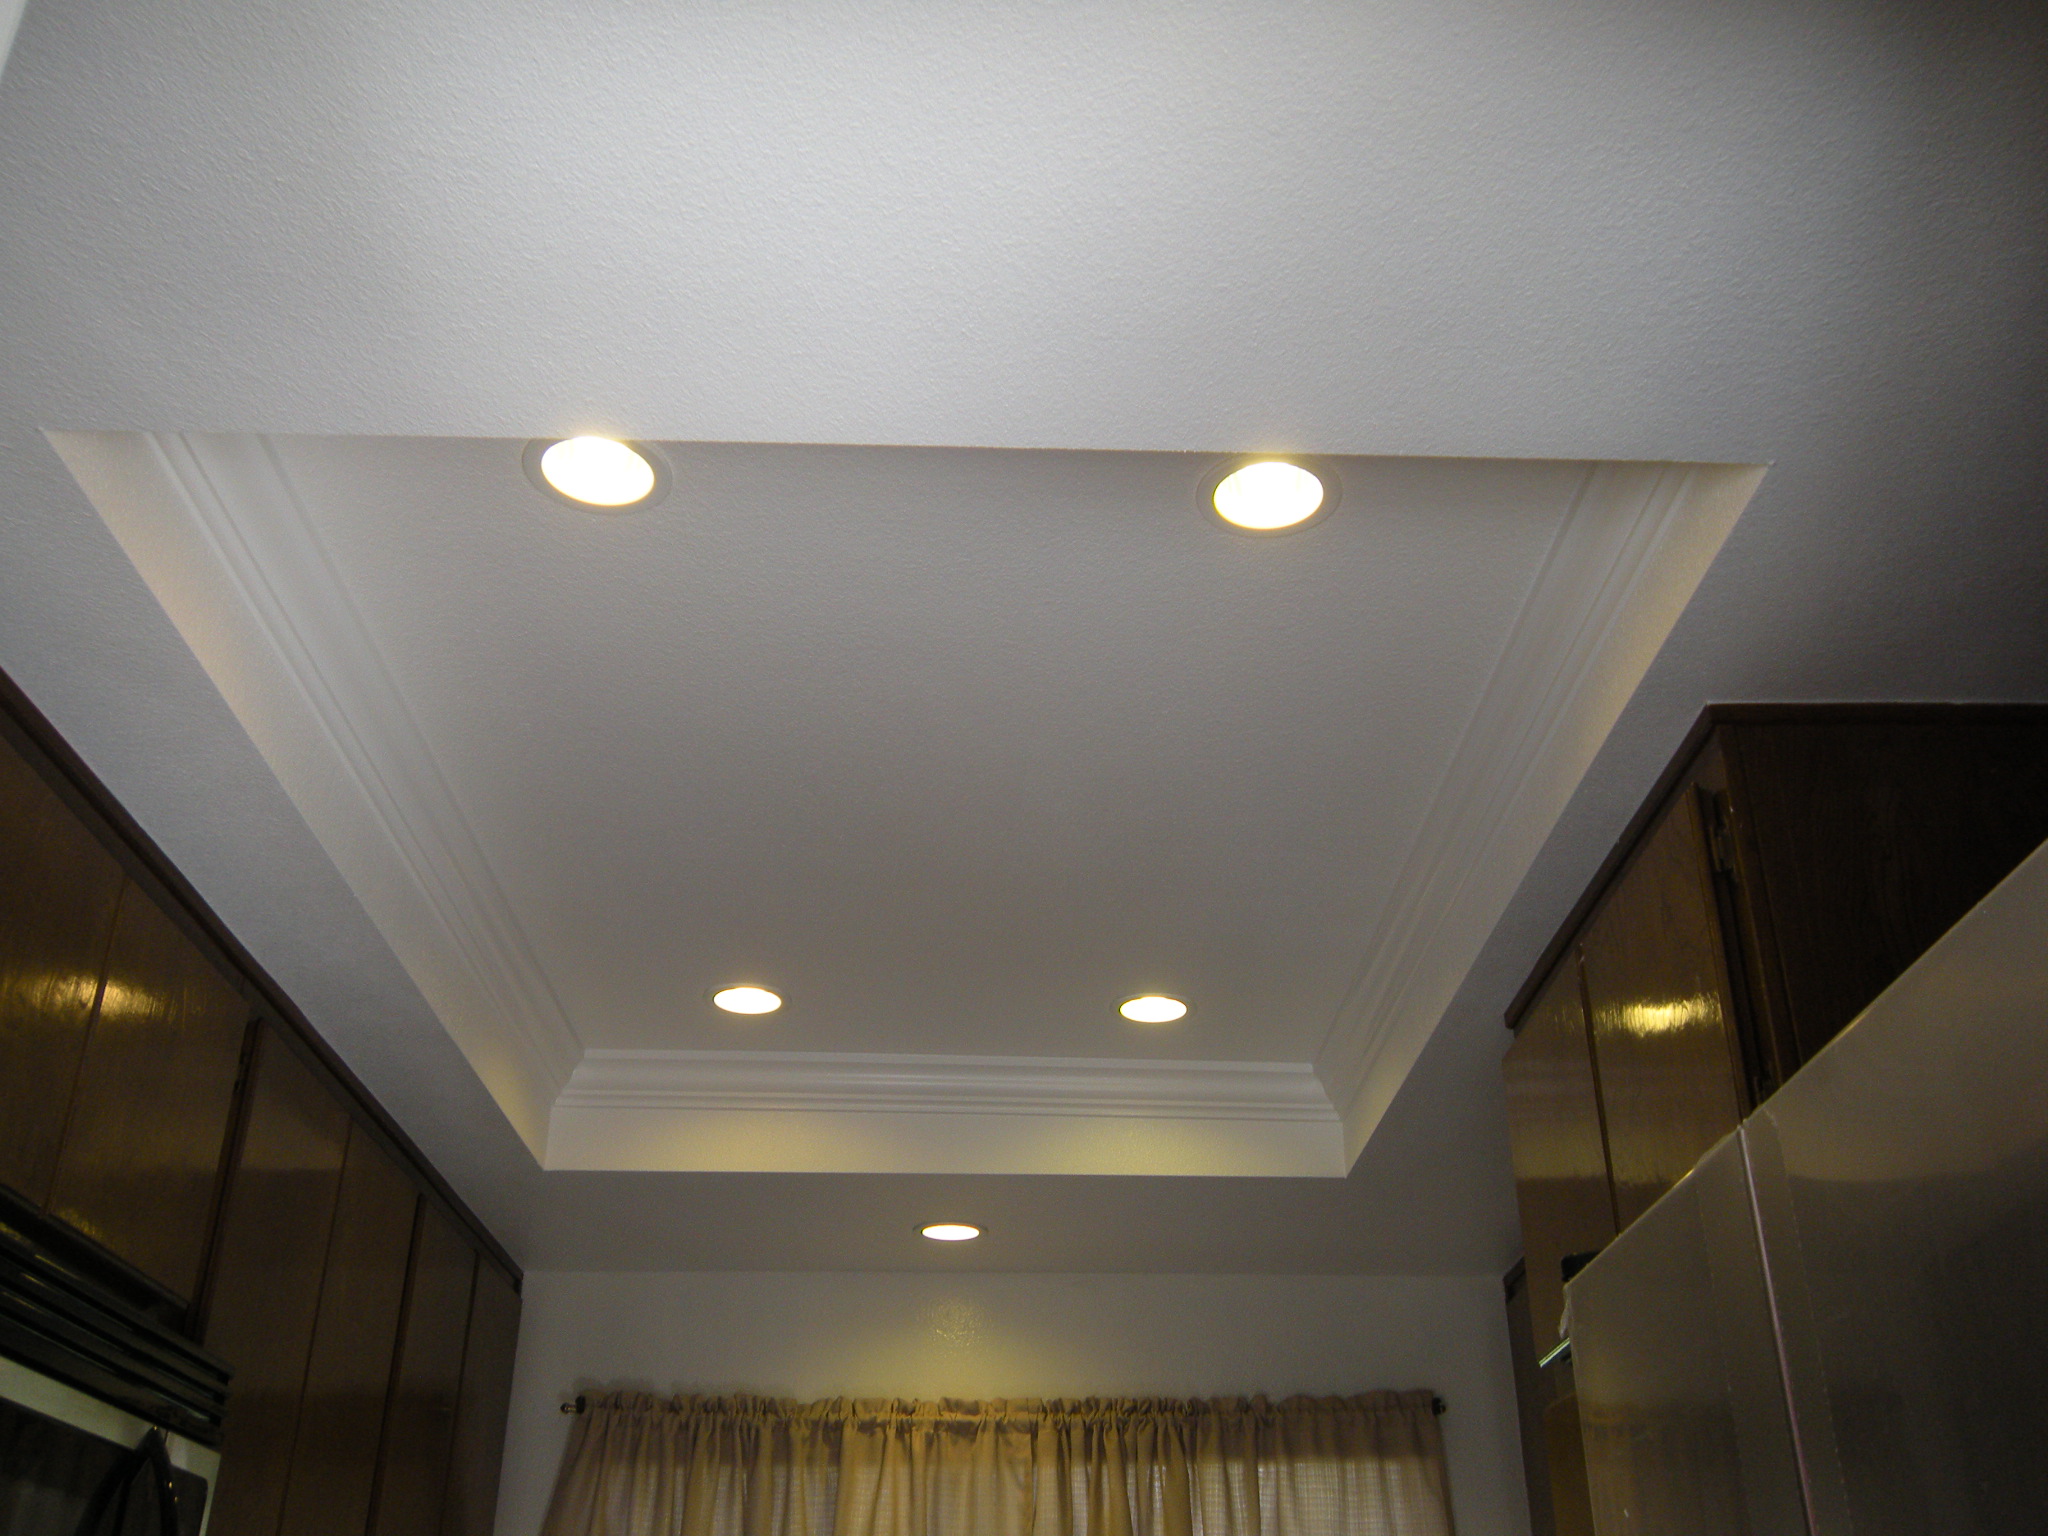 ceiling spotlights over sink for bathroom lighting